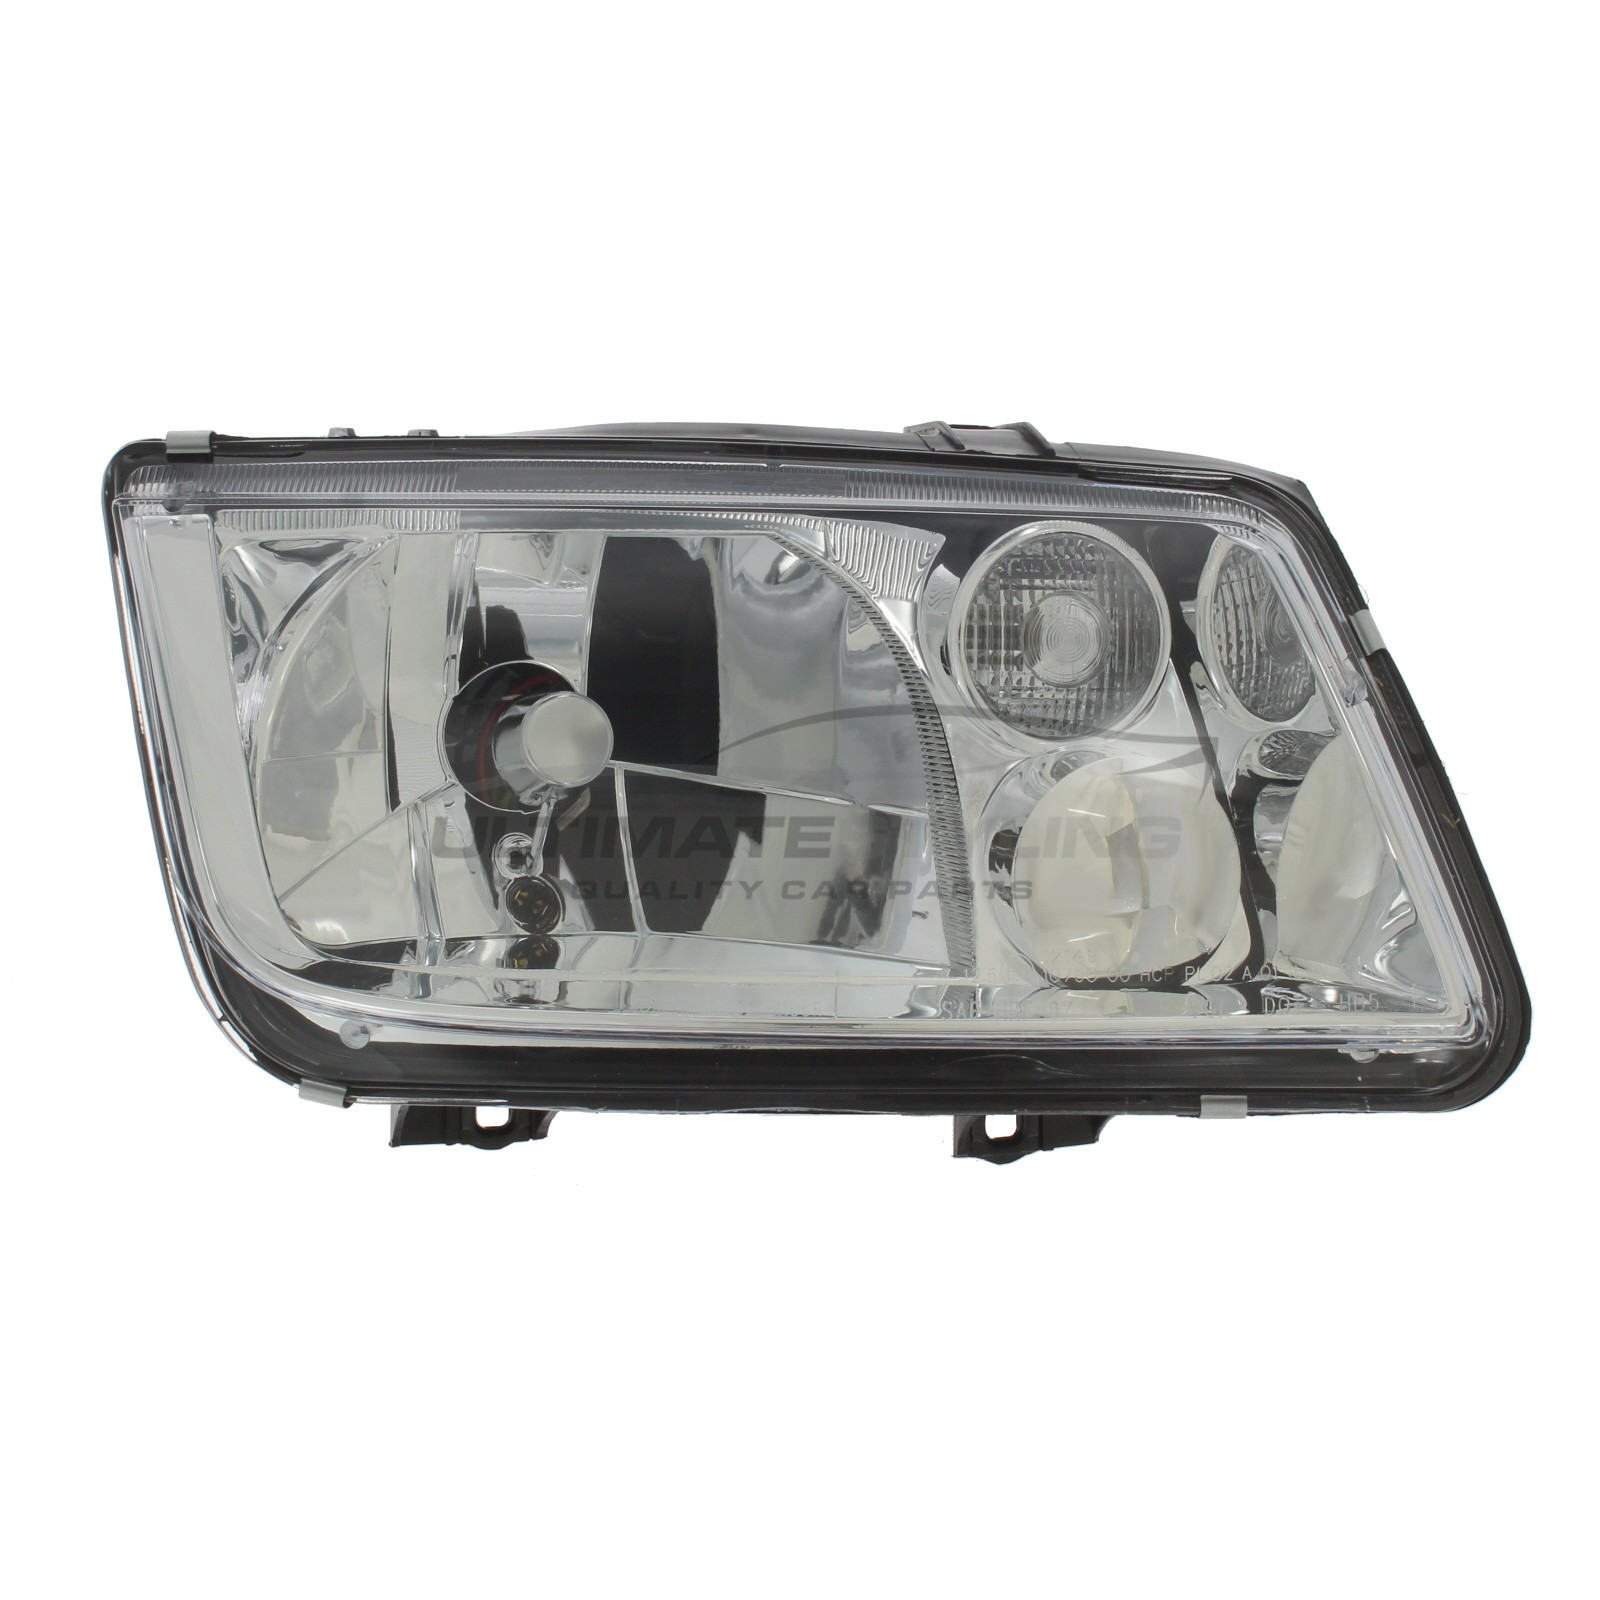 Headlight / Headlamp for VW Bora